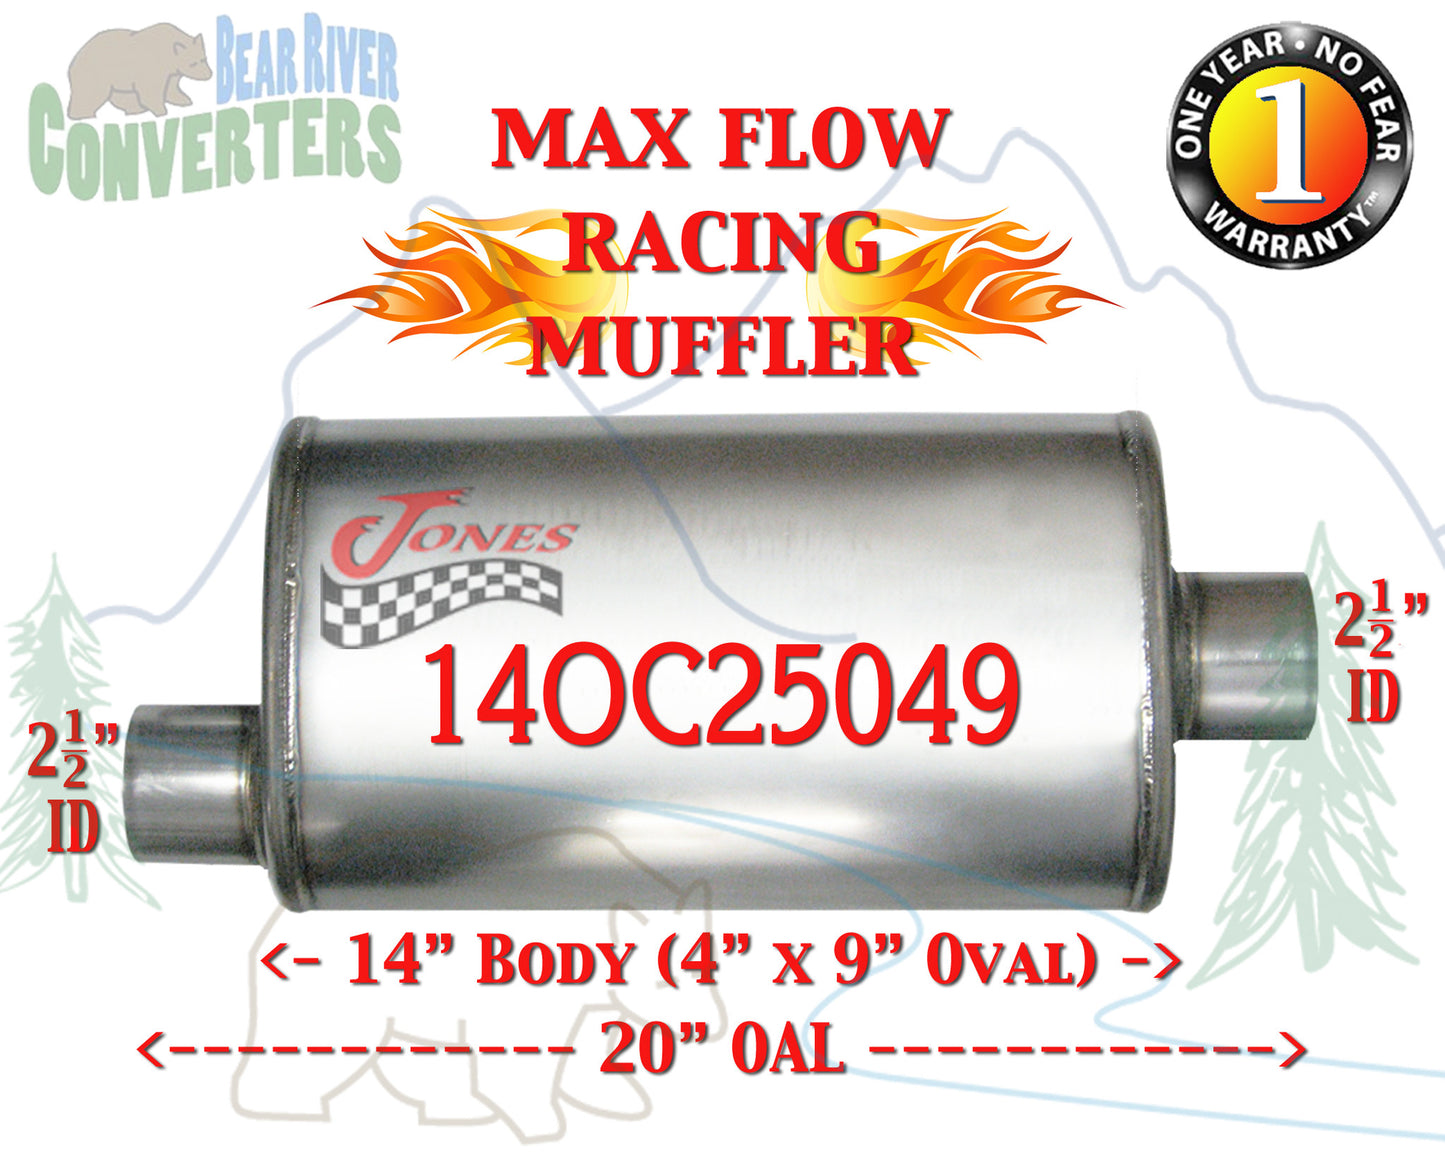 14OC25049 Jones MF1226 Max Flow Racing Muffler 14” Oval Body 2 1/2” 2.5” Pipe Offset/Center 20” OAL - Bear River Converters